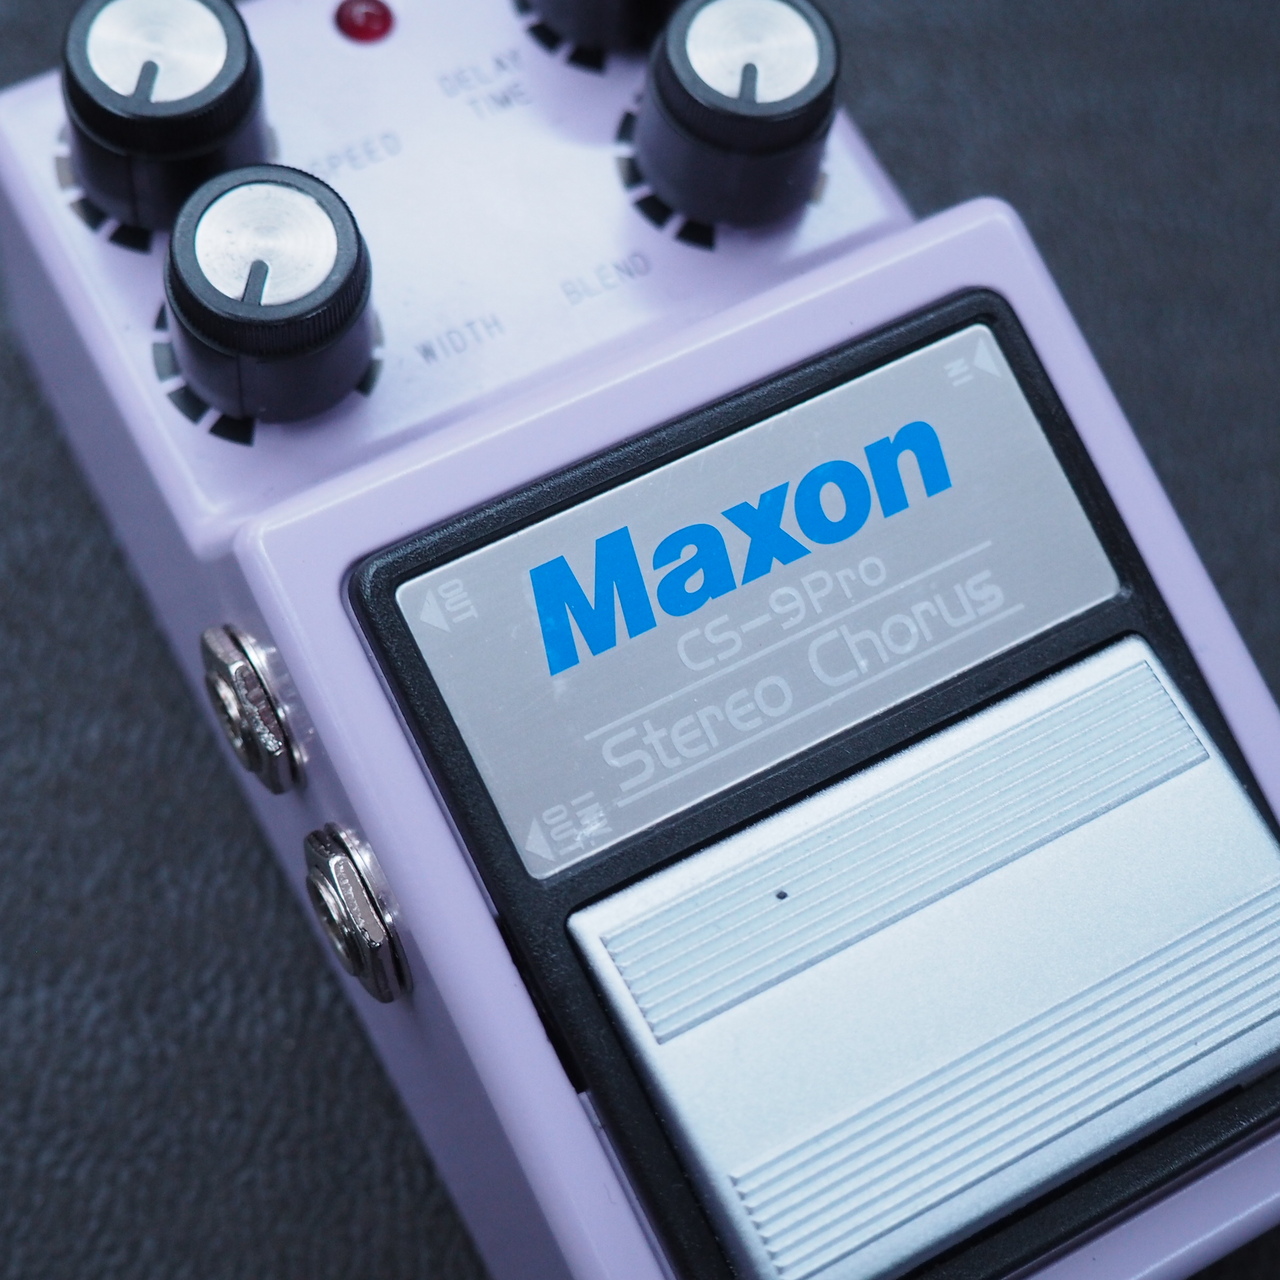 MAXON Stereo Chorus CS-9